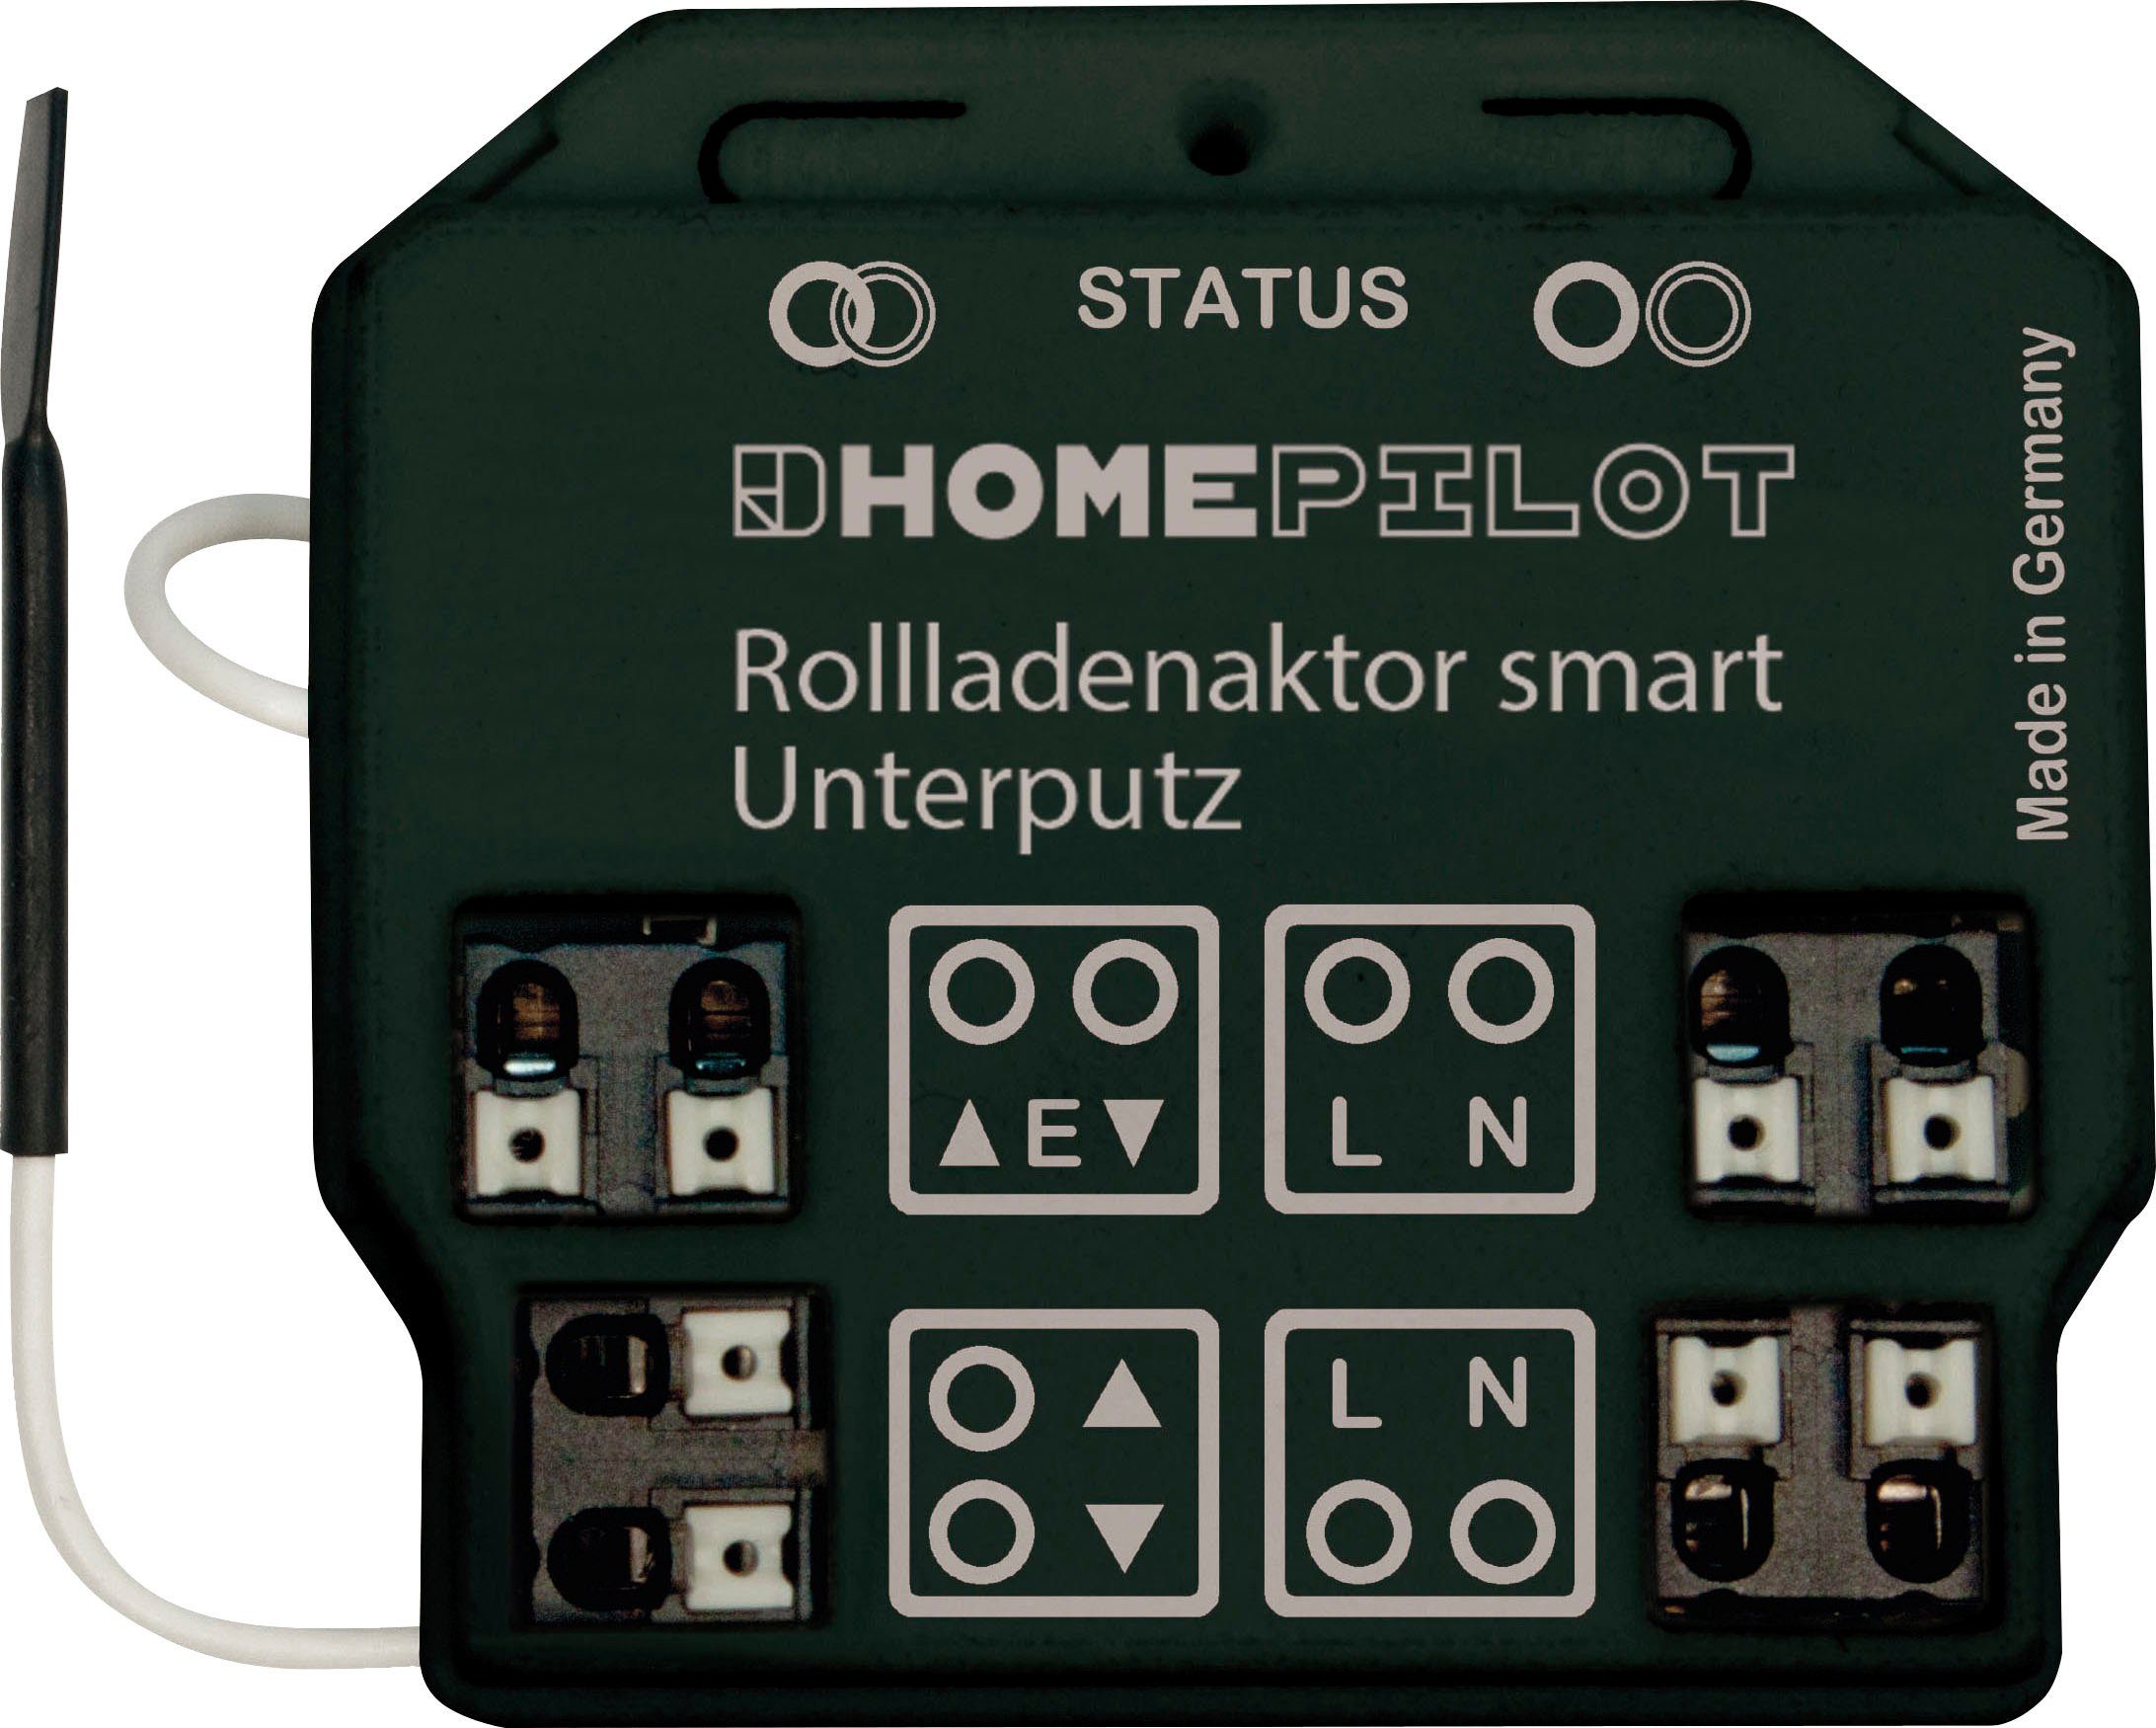 HOMEPILOT Rollladenaktor Sensor smart Unterputz